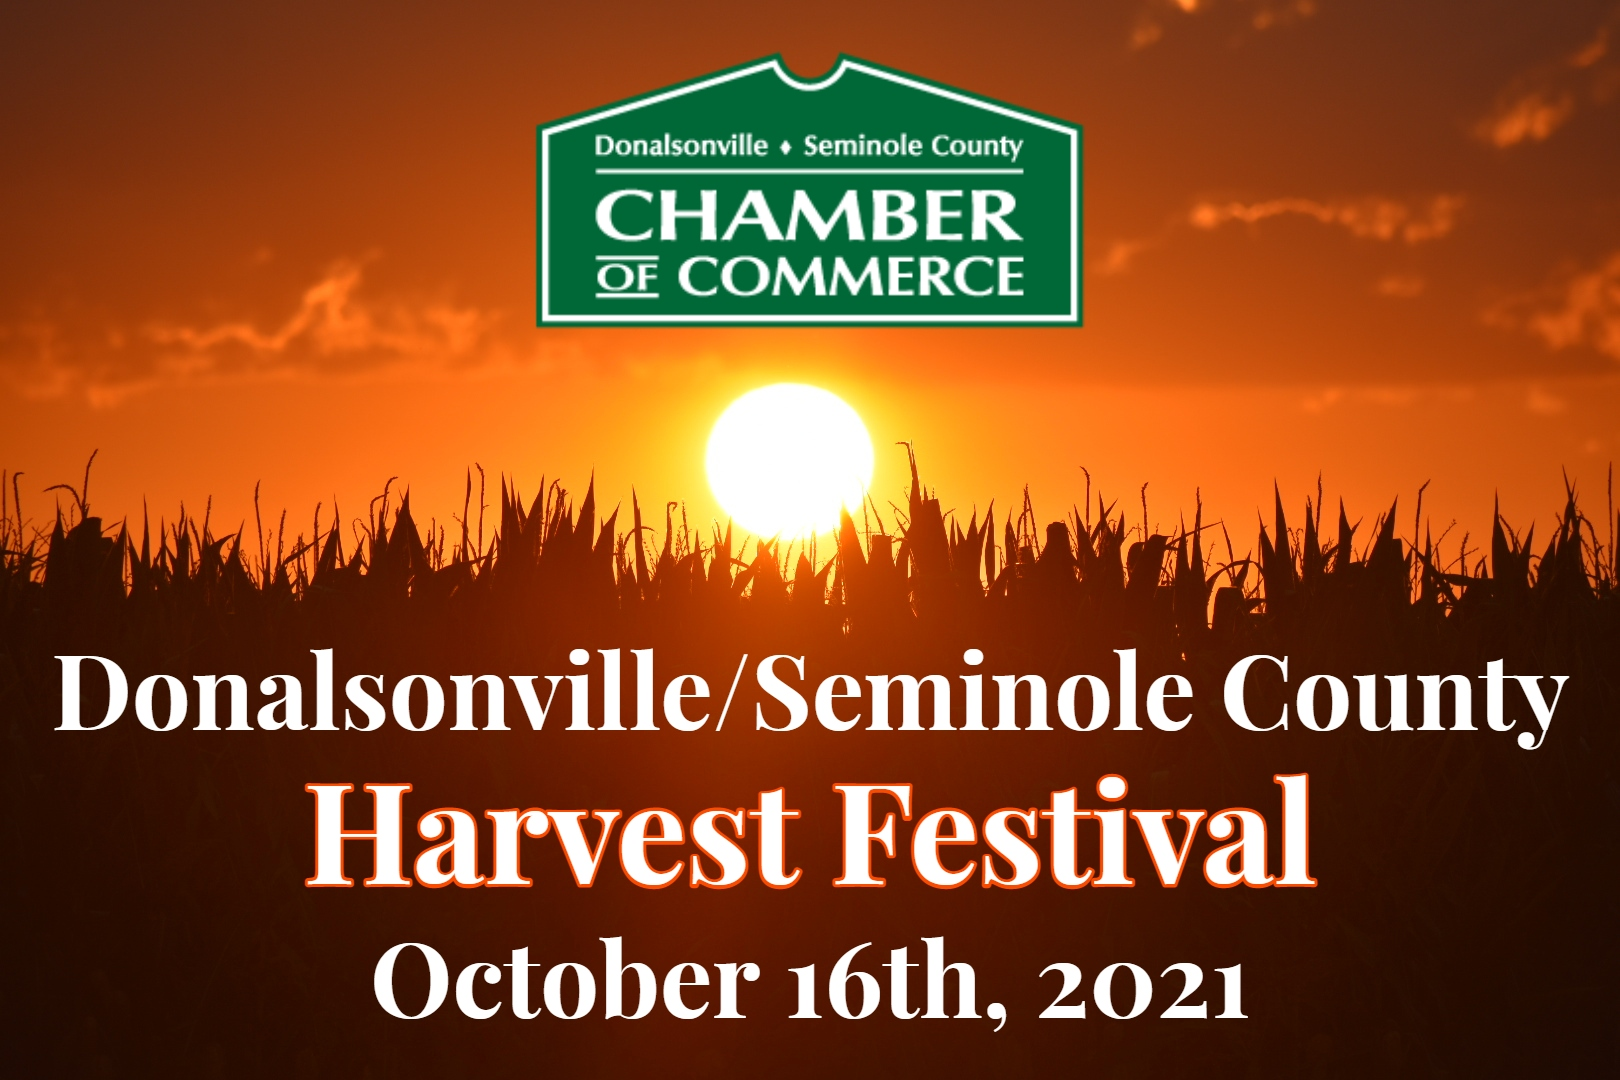 Donalsonville/Seminole County Harvest Festival